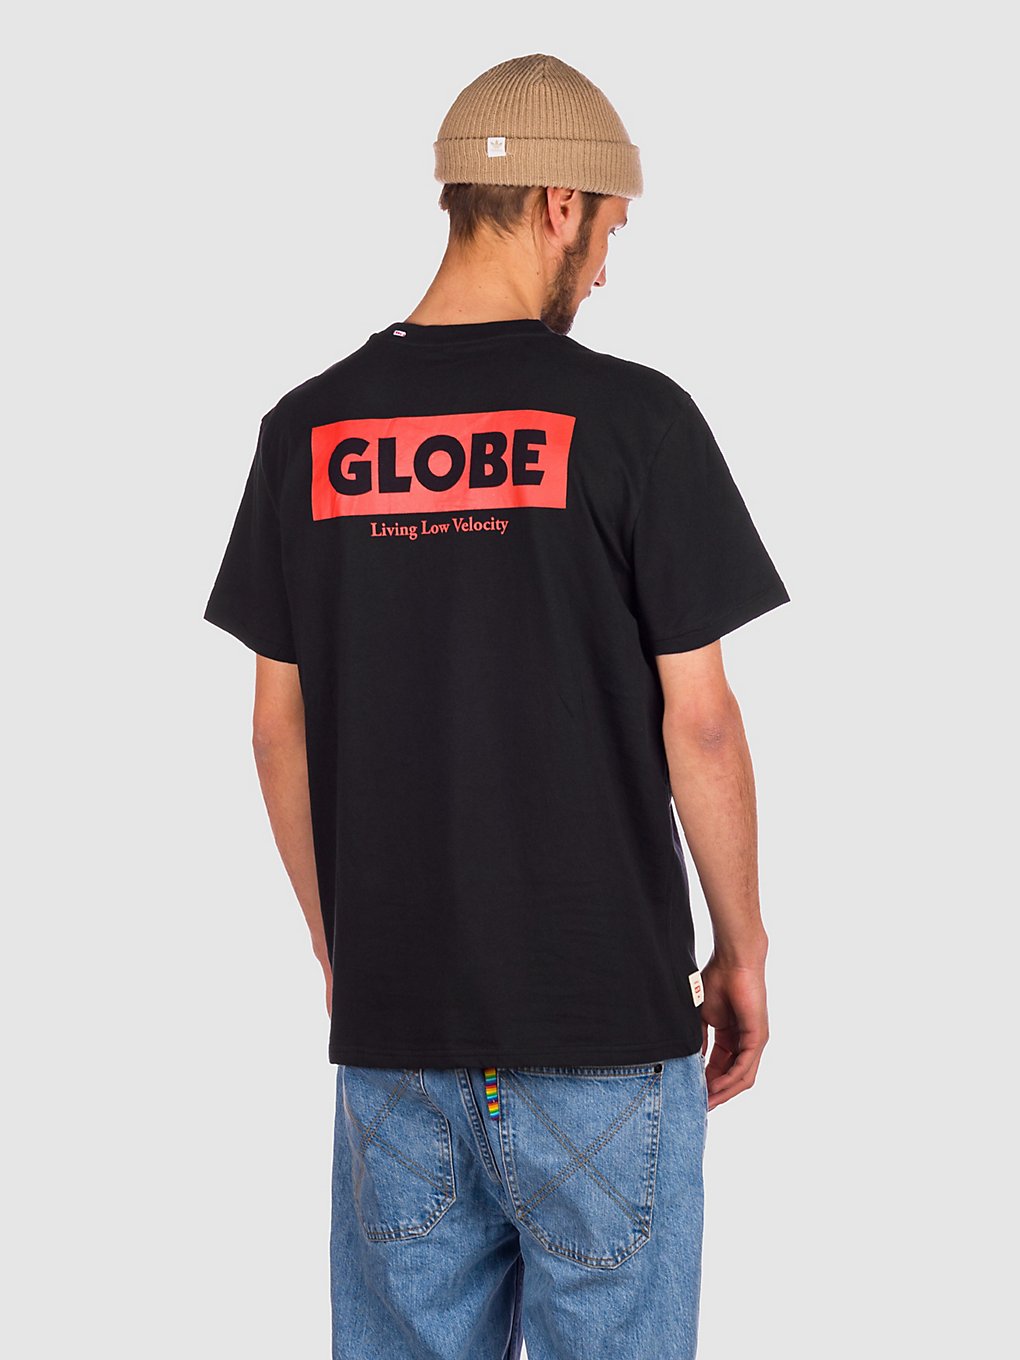 Globe Living Low Velocity T-Shirt black kaufen